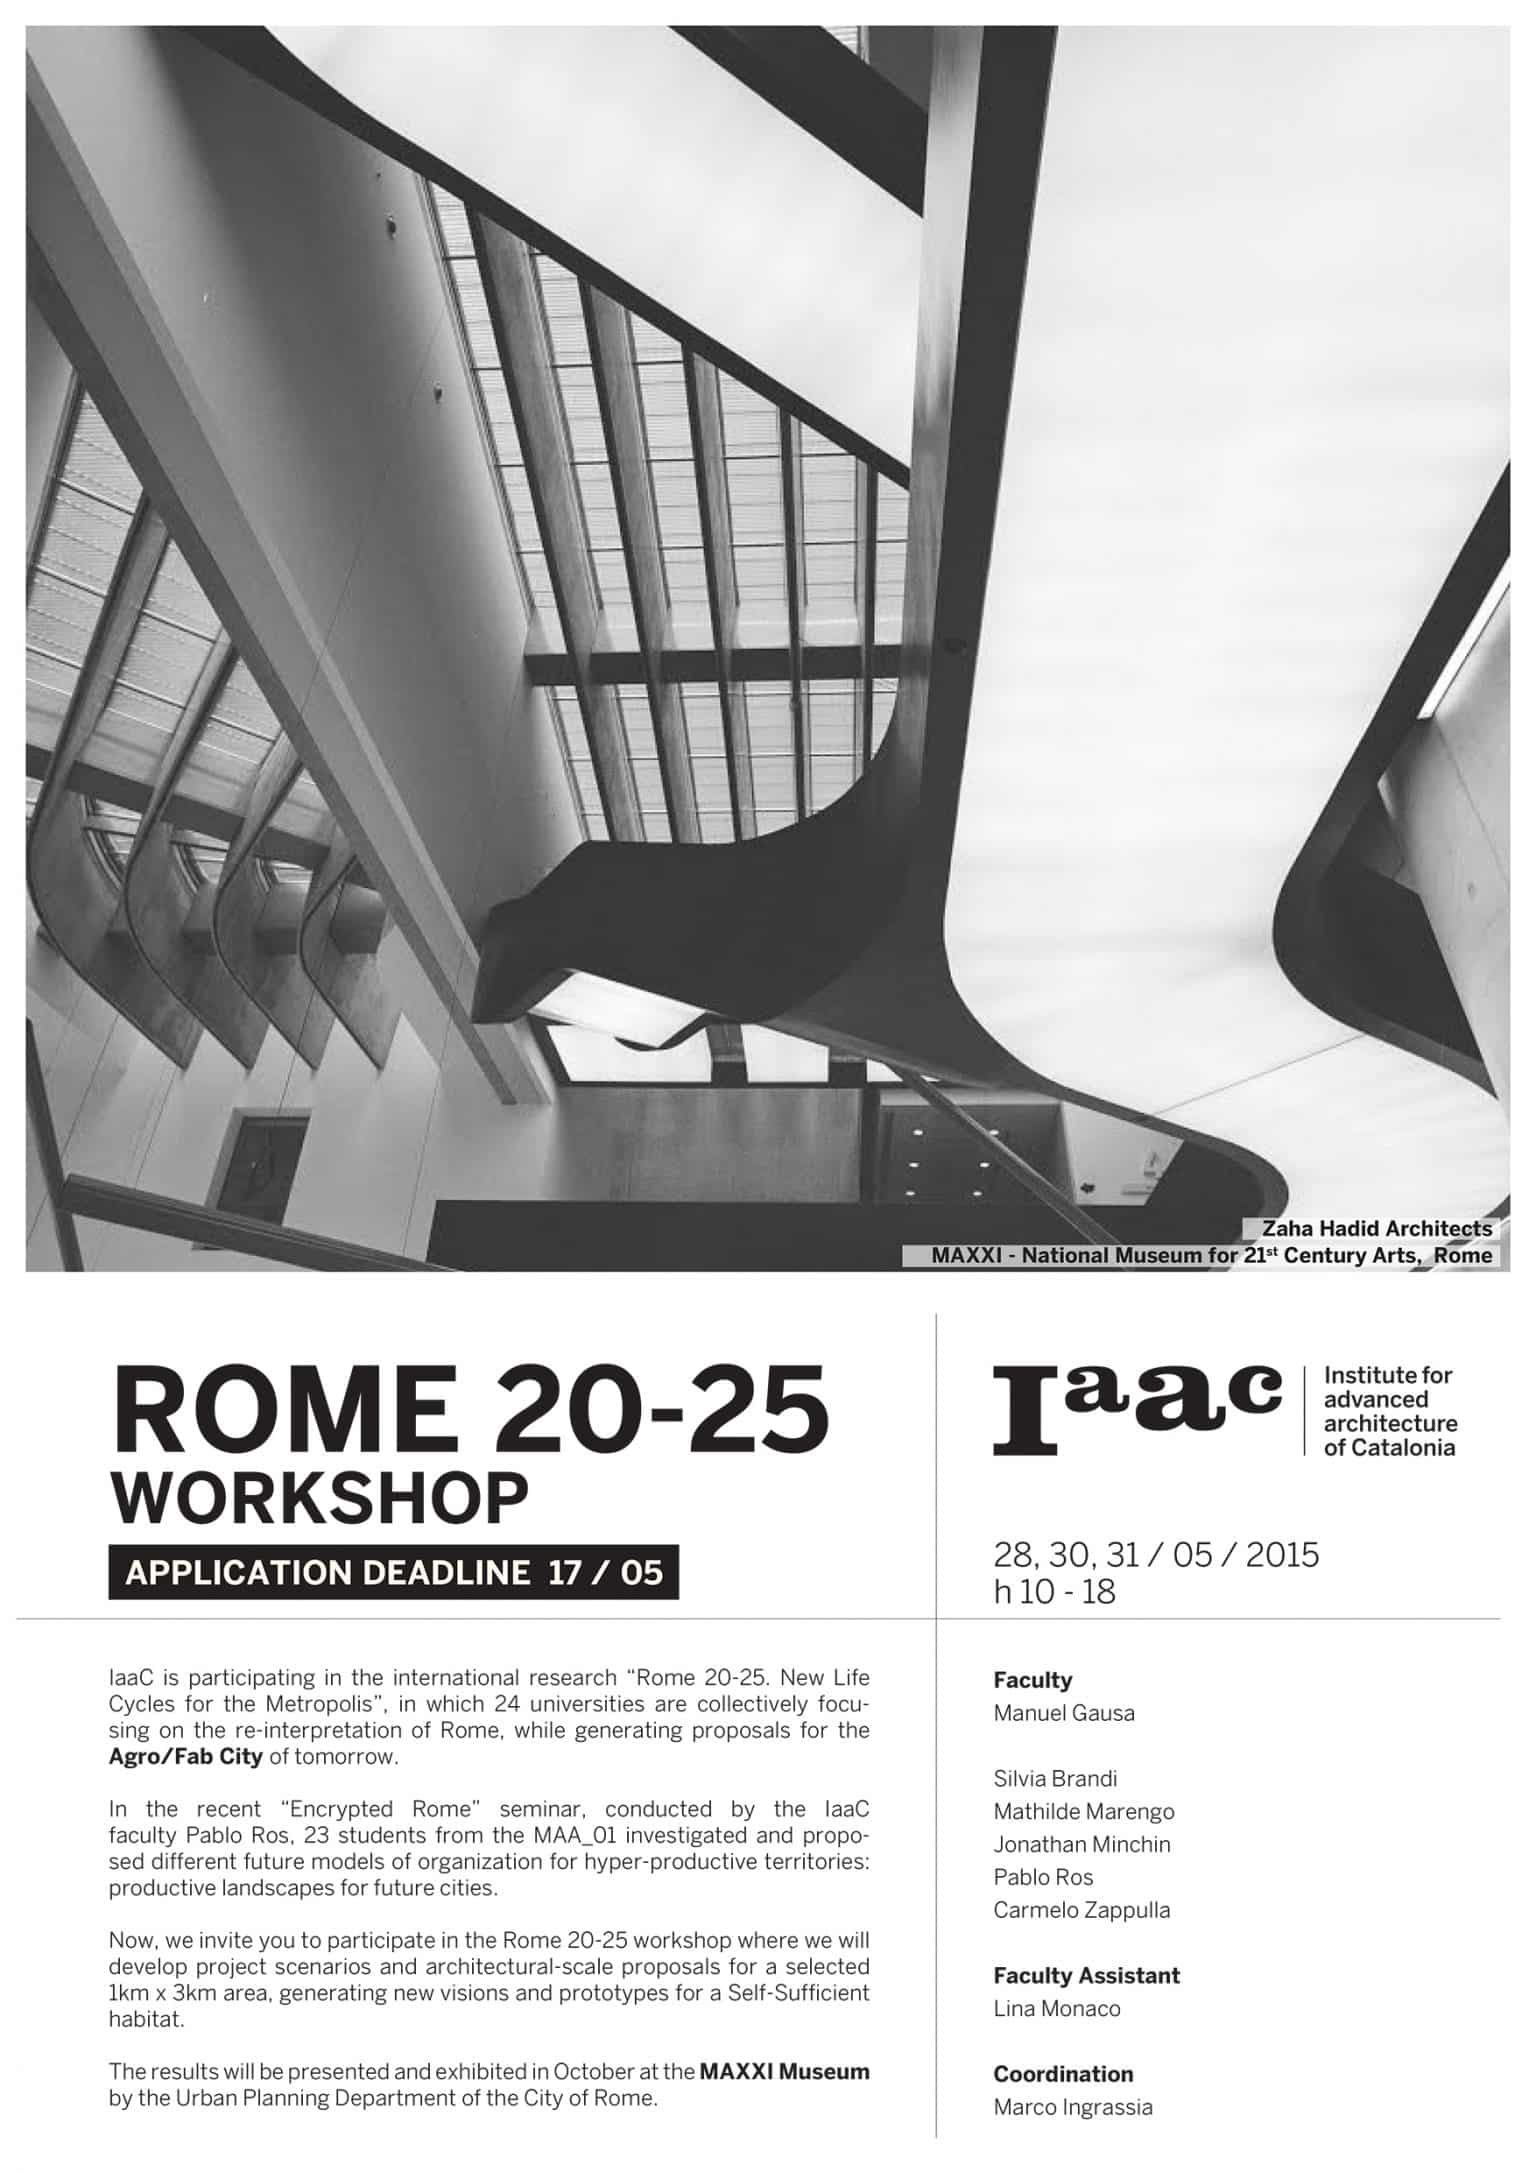 IAAC Rome 20-25 Workshop